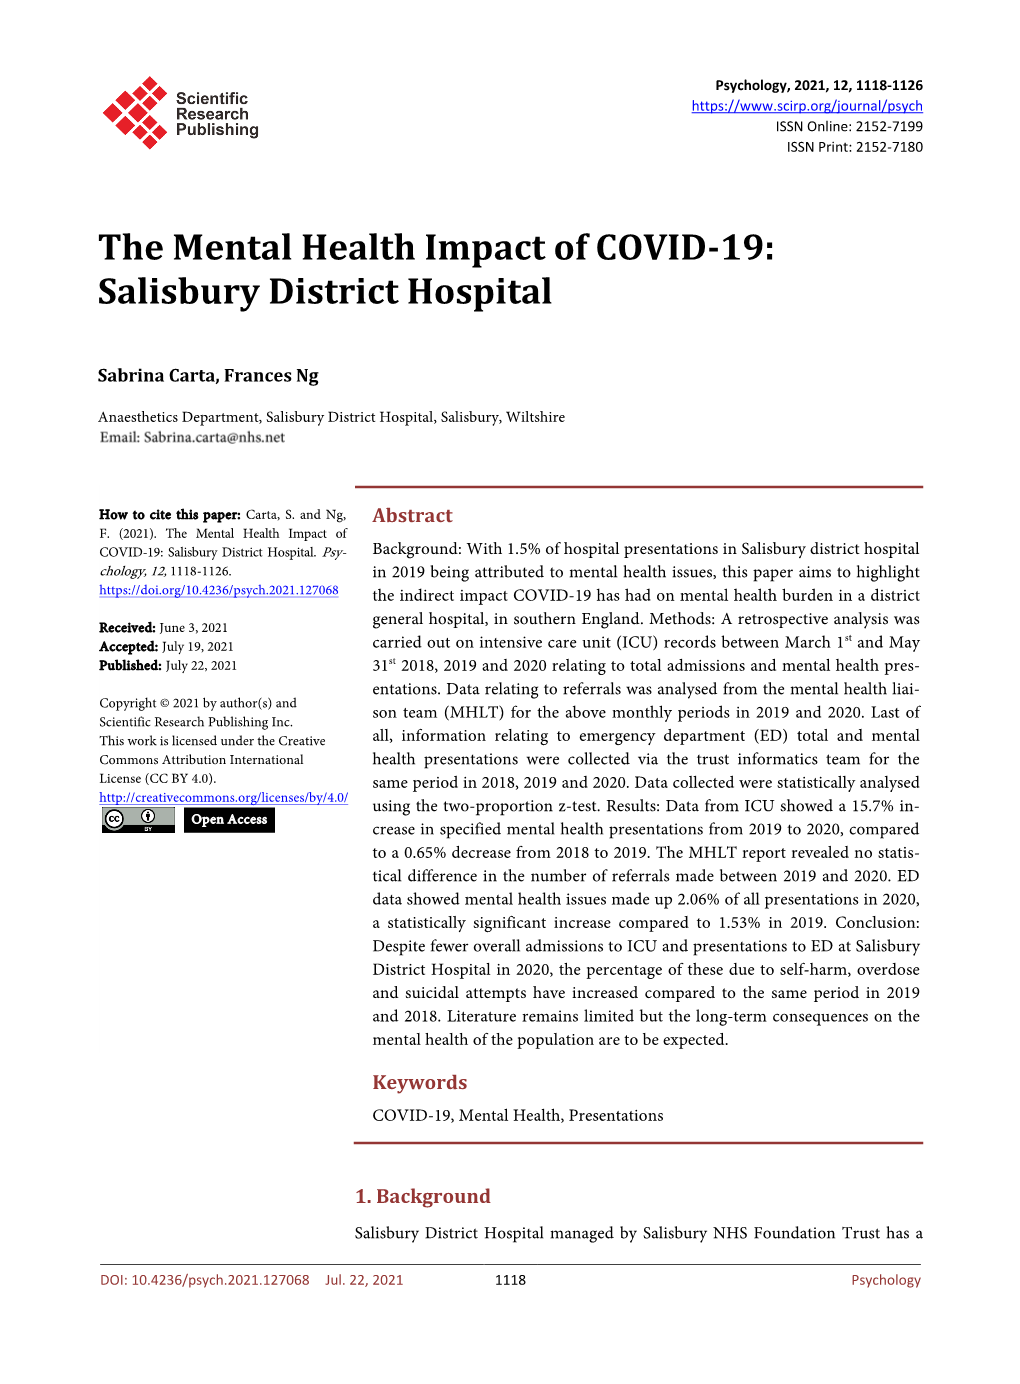 The Mental Health Impact of COVID-19: Salisbury District Hospital